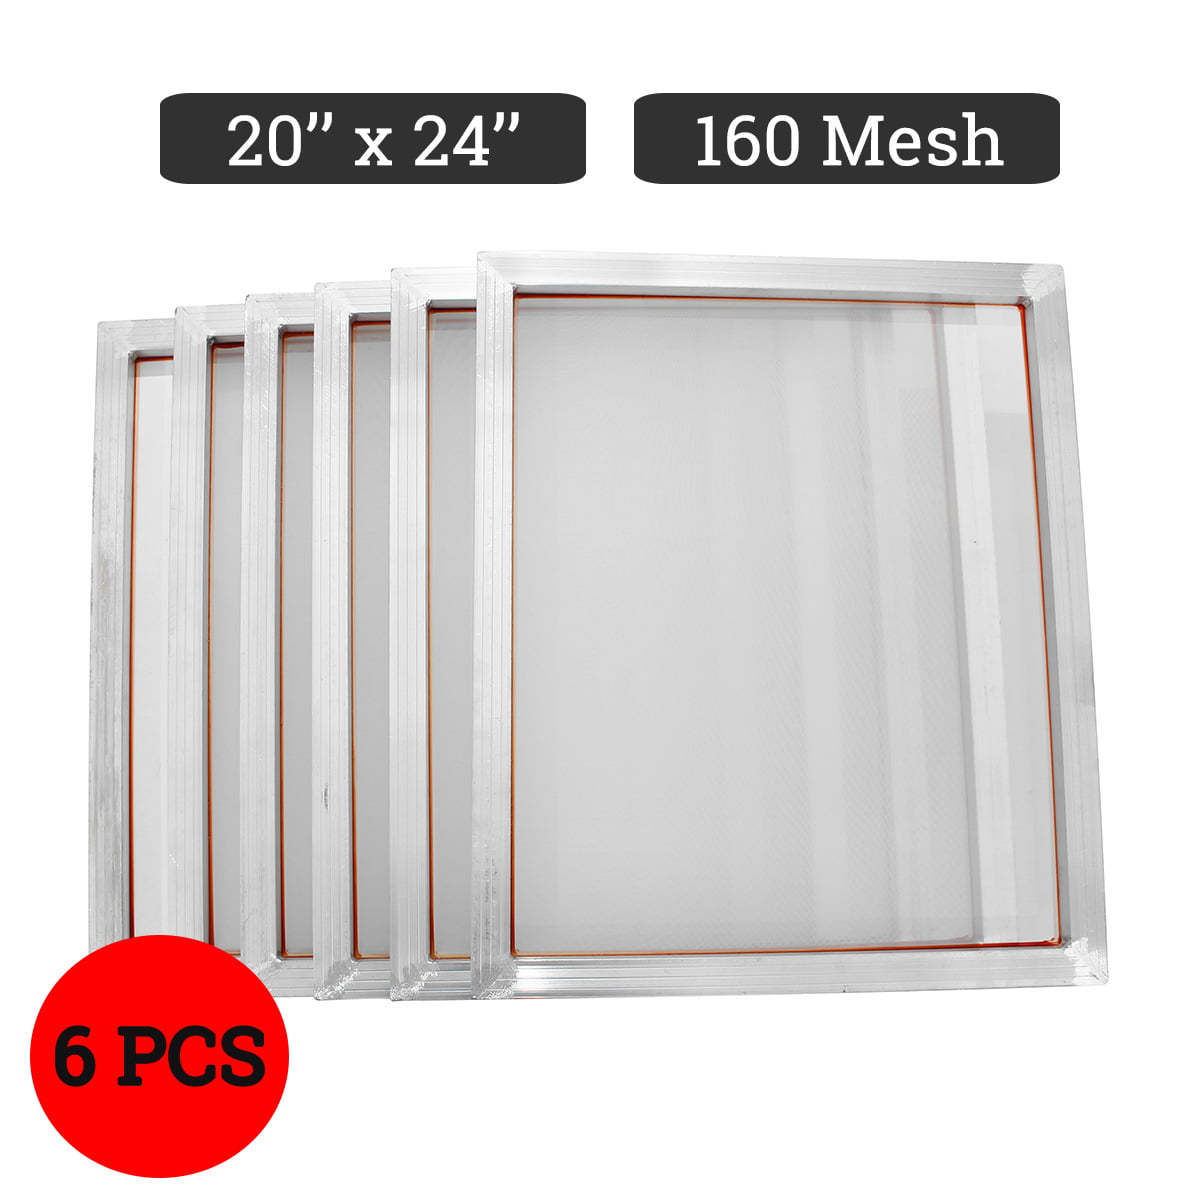 6 Pack 20" x 24" Aluminum Frame Silk Screen Printing Screens with 160 Mesh USA 